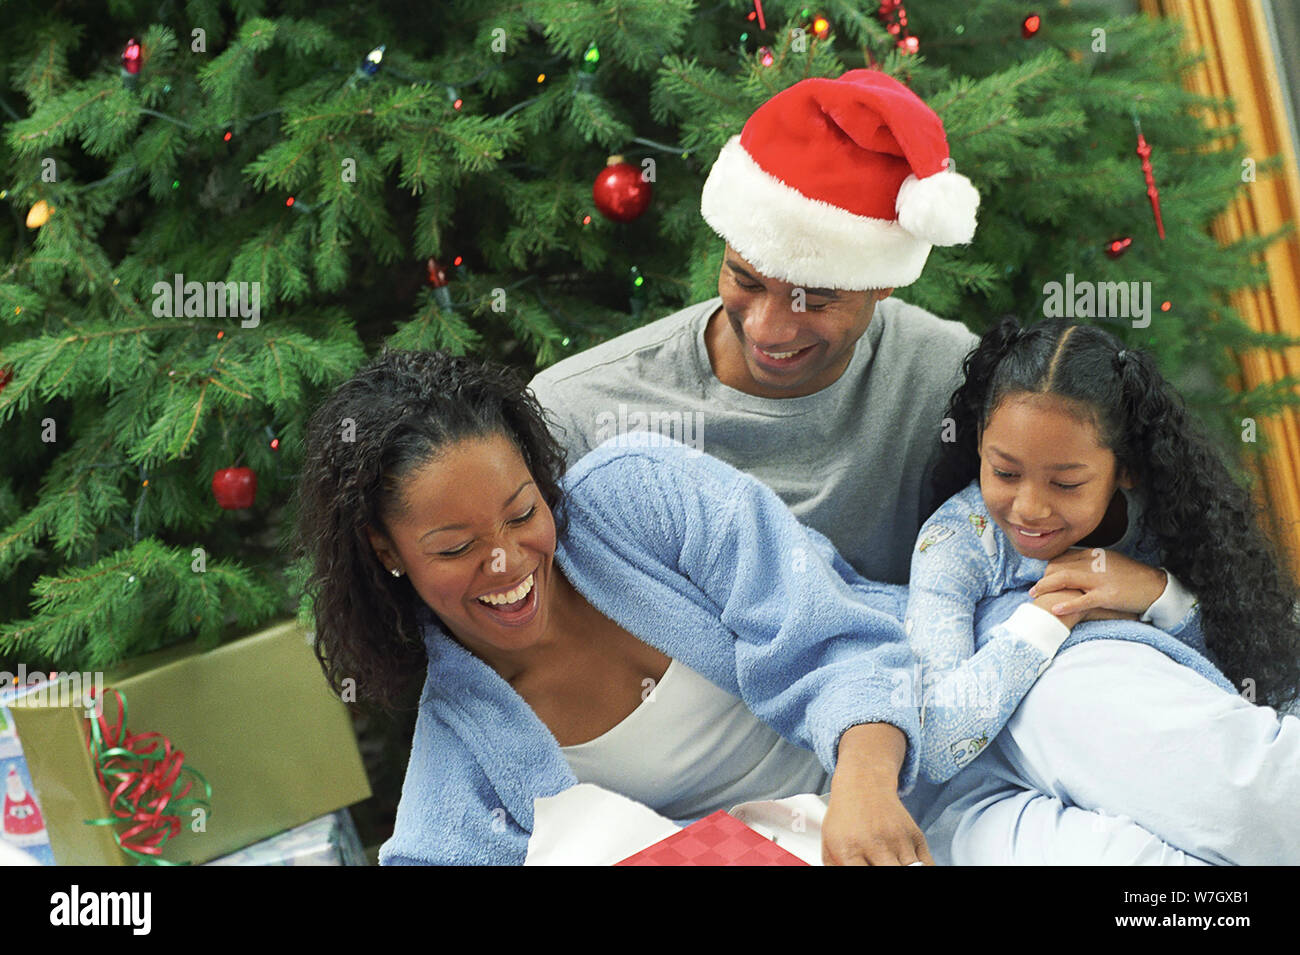 Family together on Christmas Stock Photo